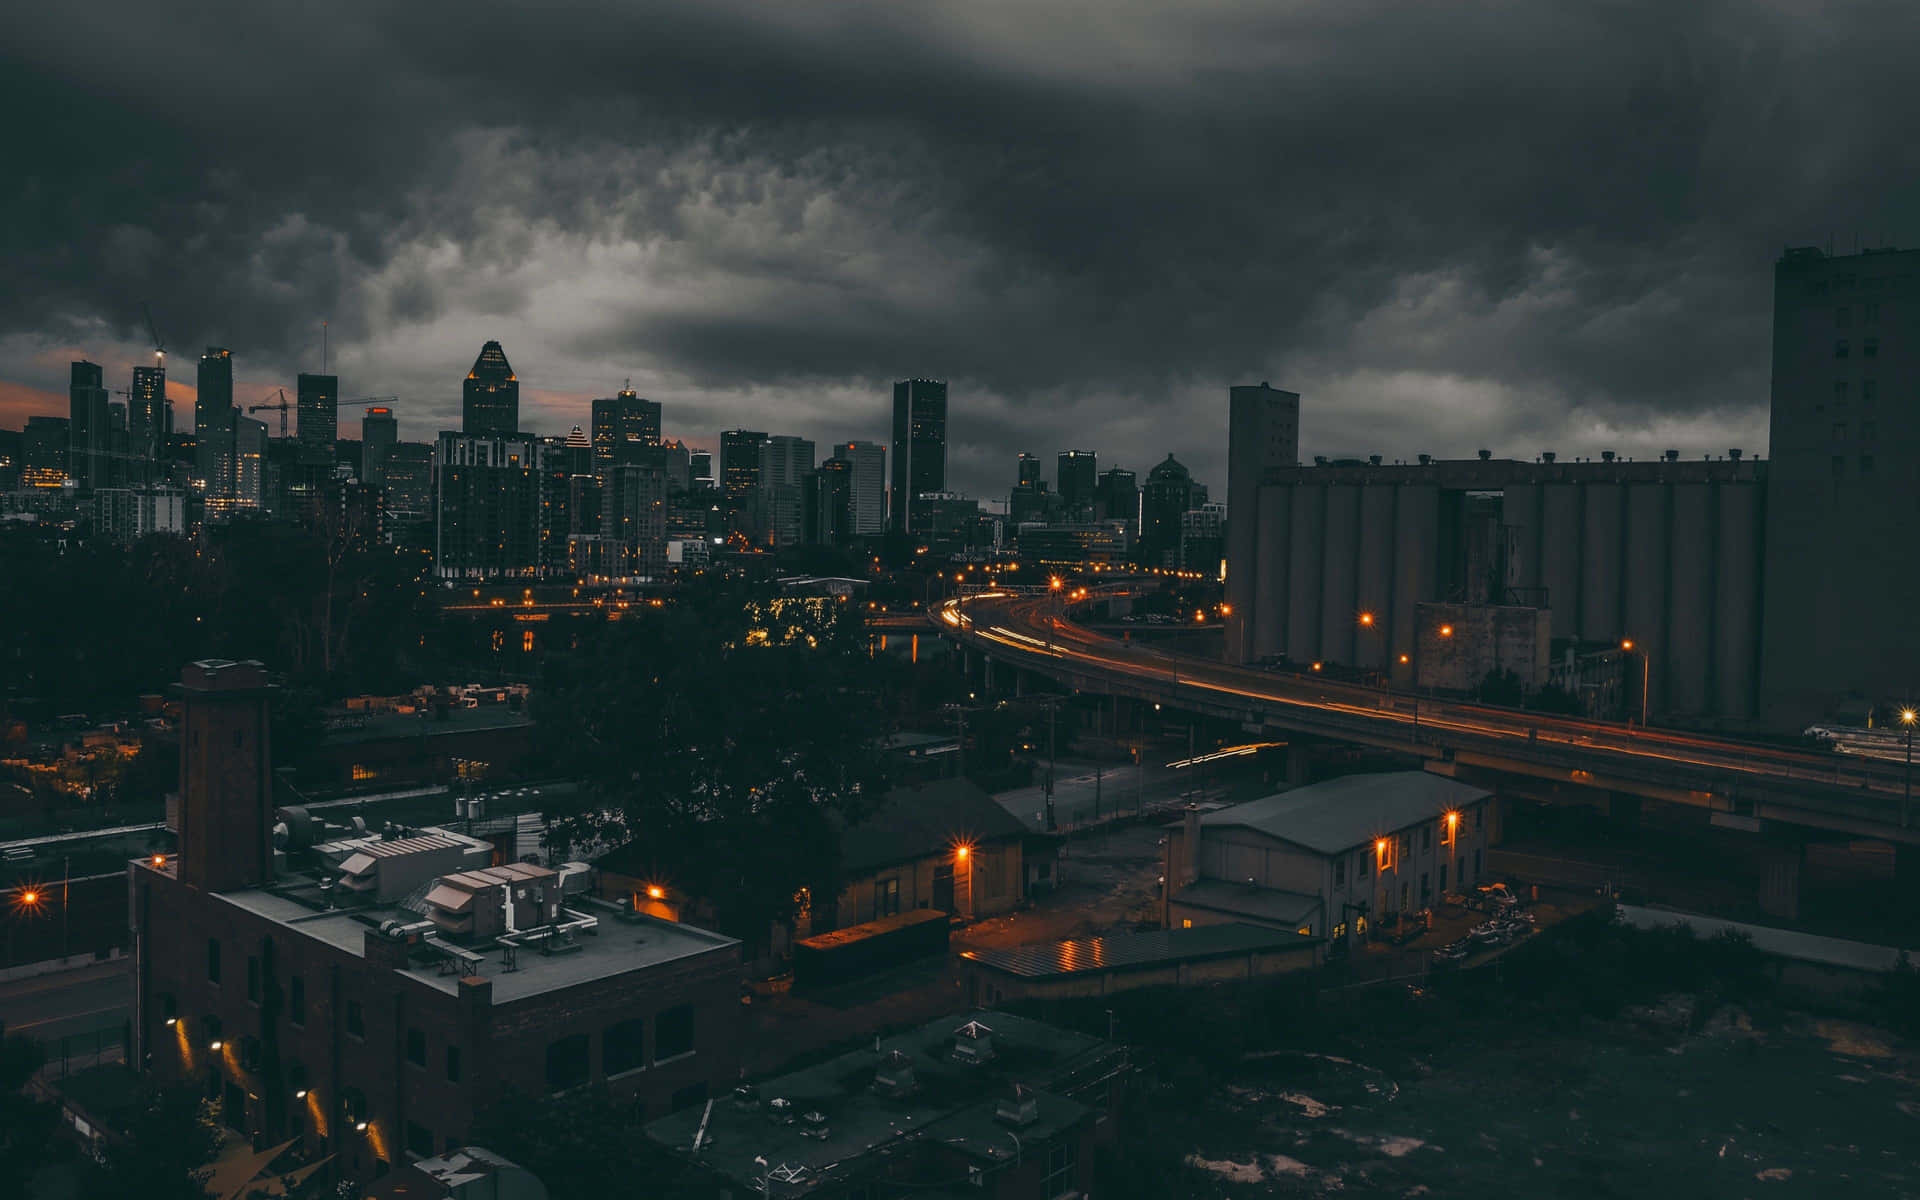 dark cloudy sky over city